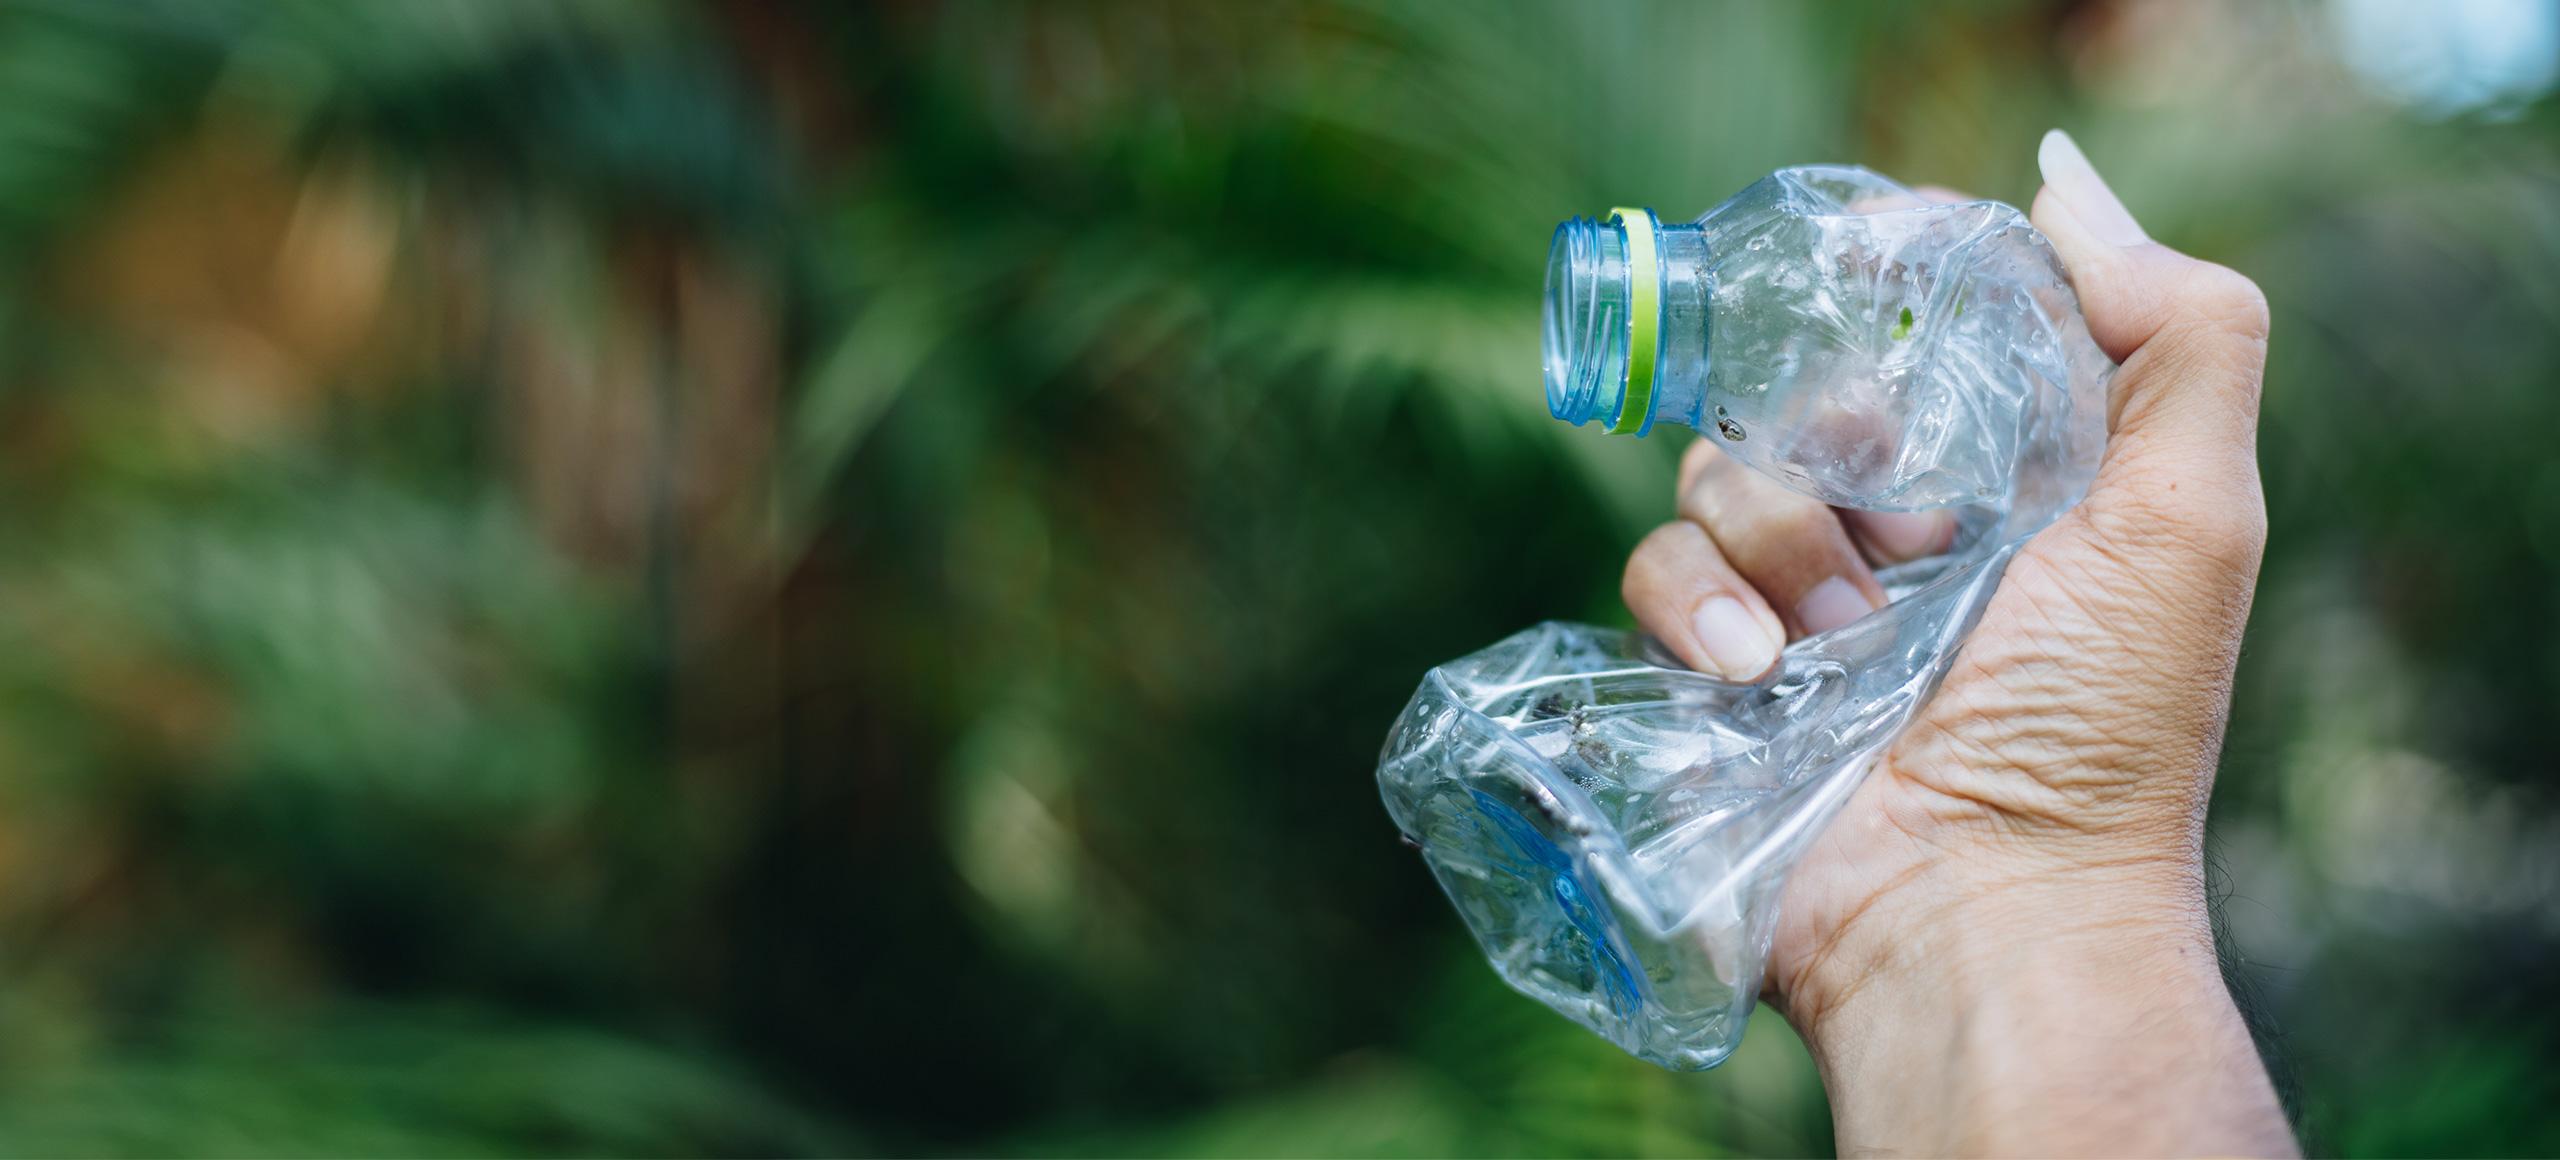 Person crushing single-use plastic bottle